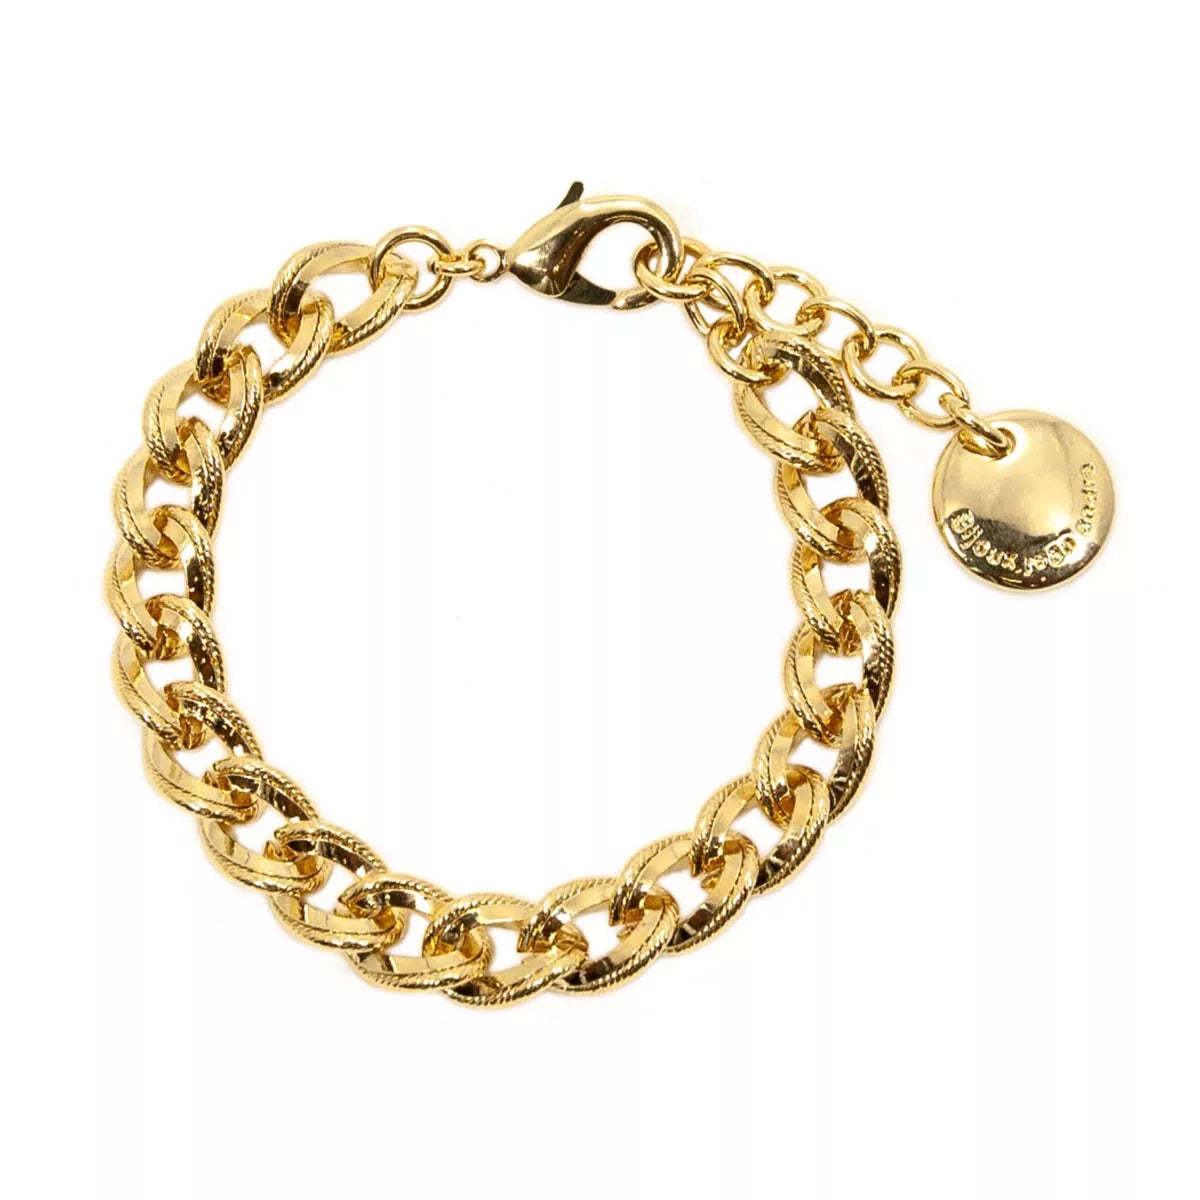 Barbazzal chain bracelet